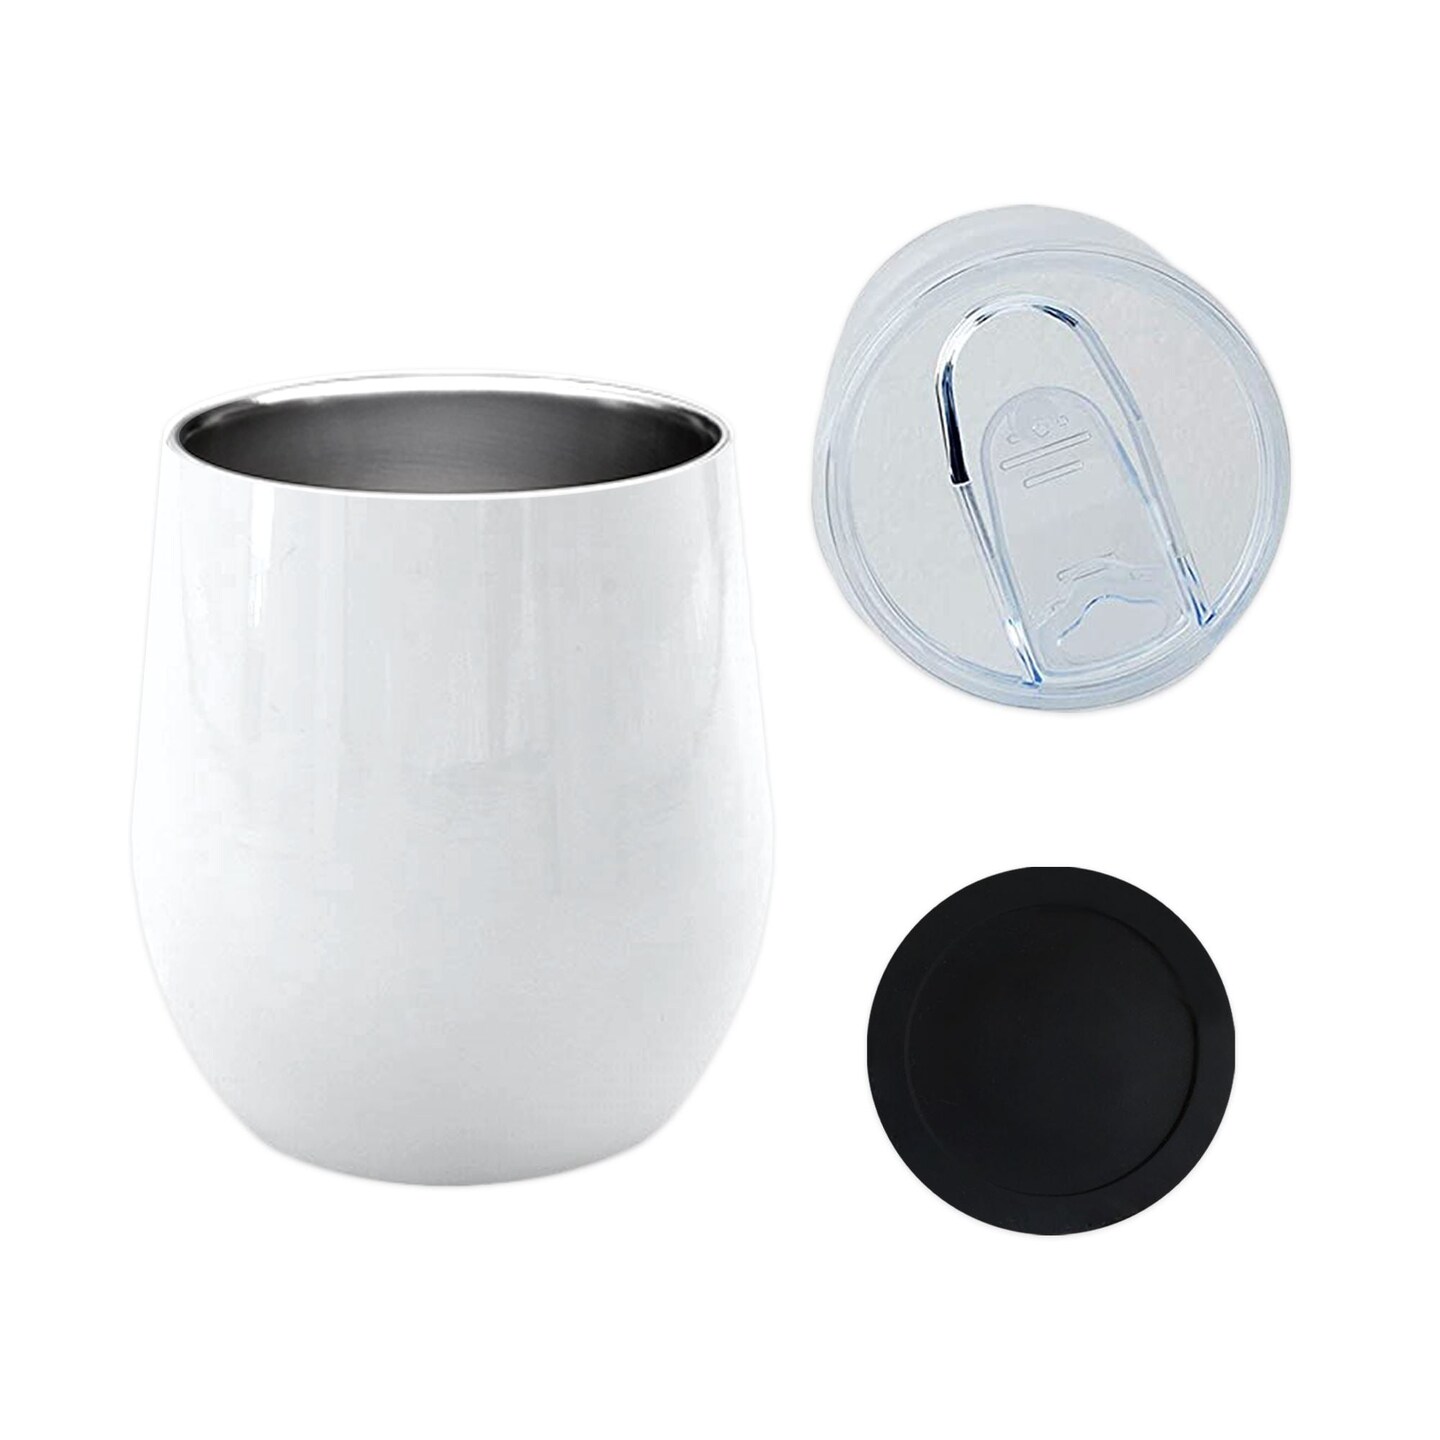 Mug & Cup Sublimation Blanks Sample Pack - 6 Piece